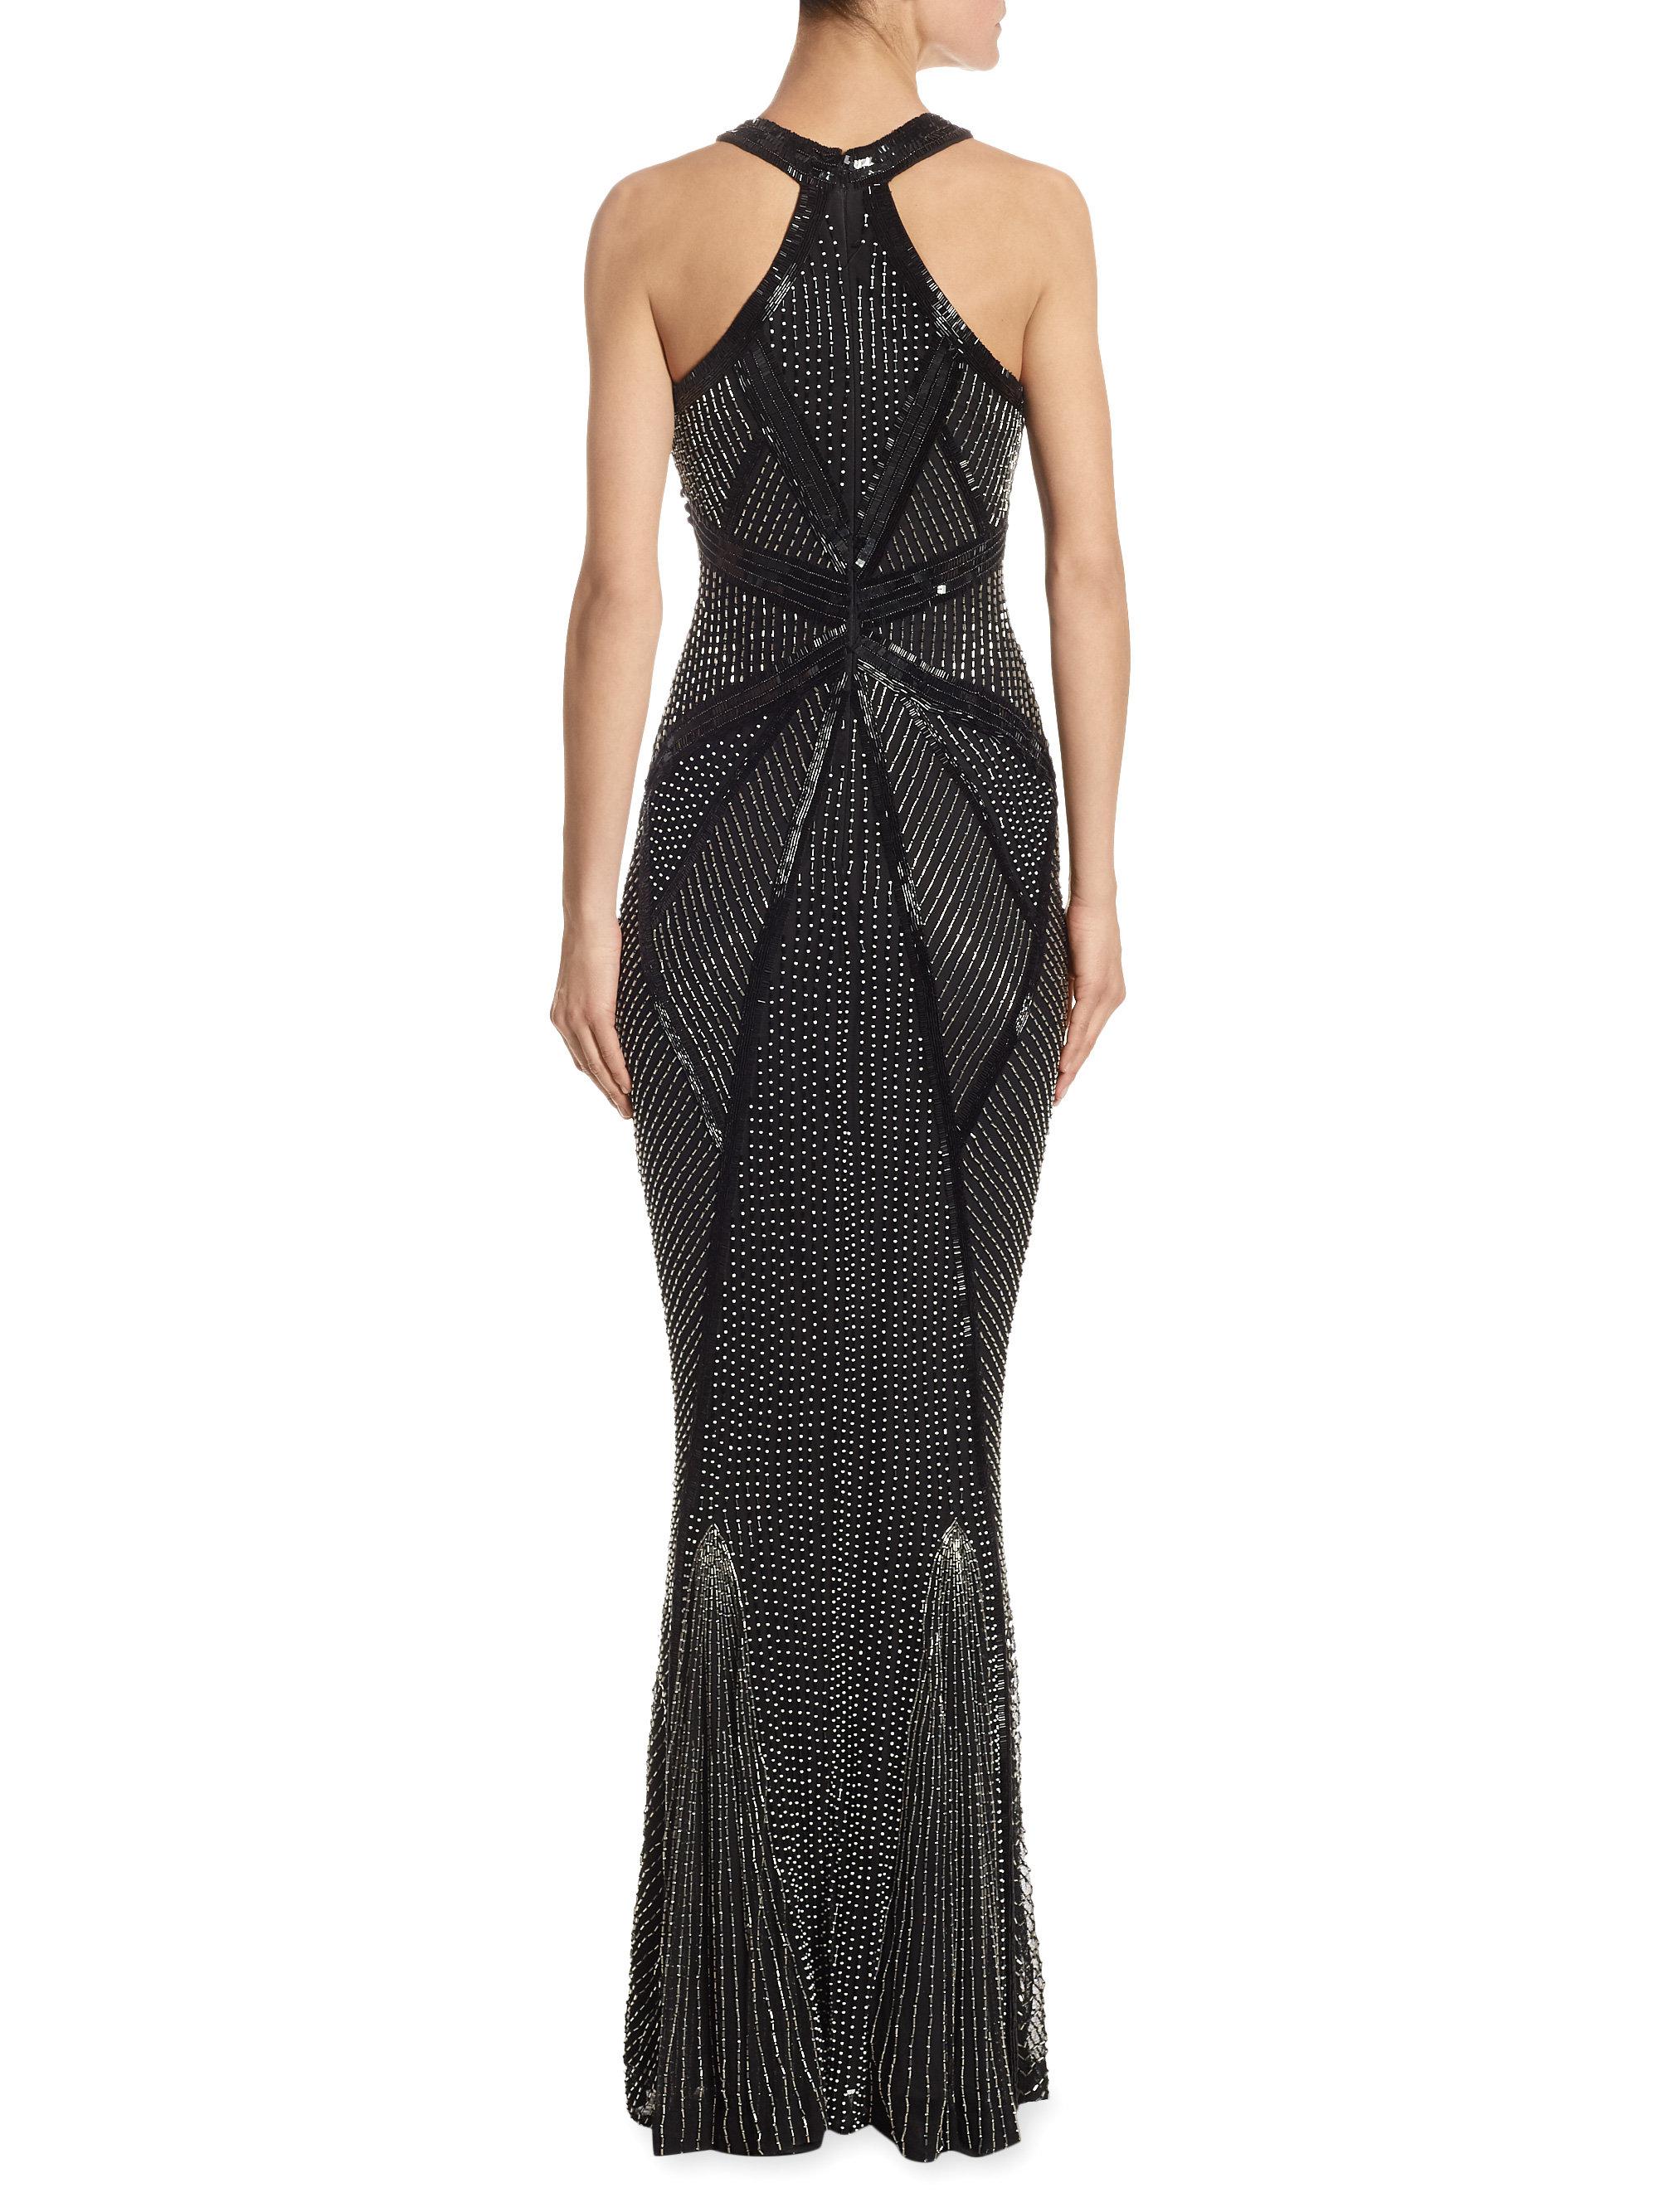 Rachel Gilbert Thyra Embellished Gown in Black - Lyst